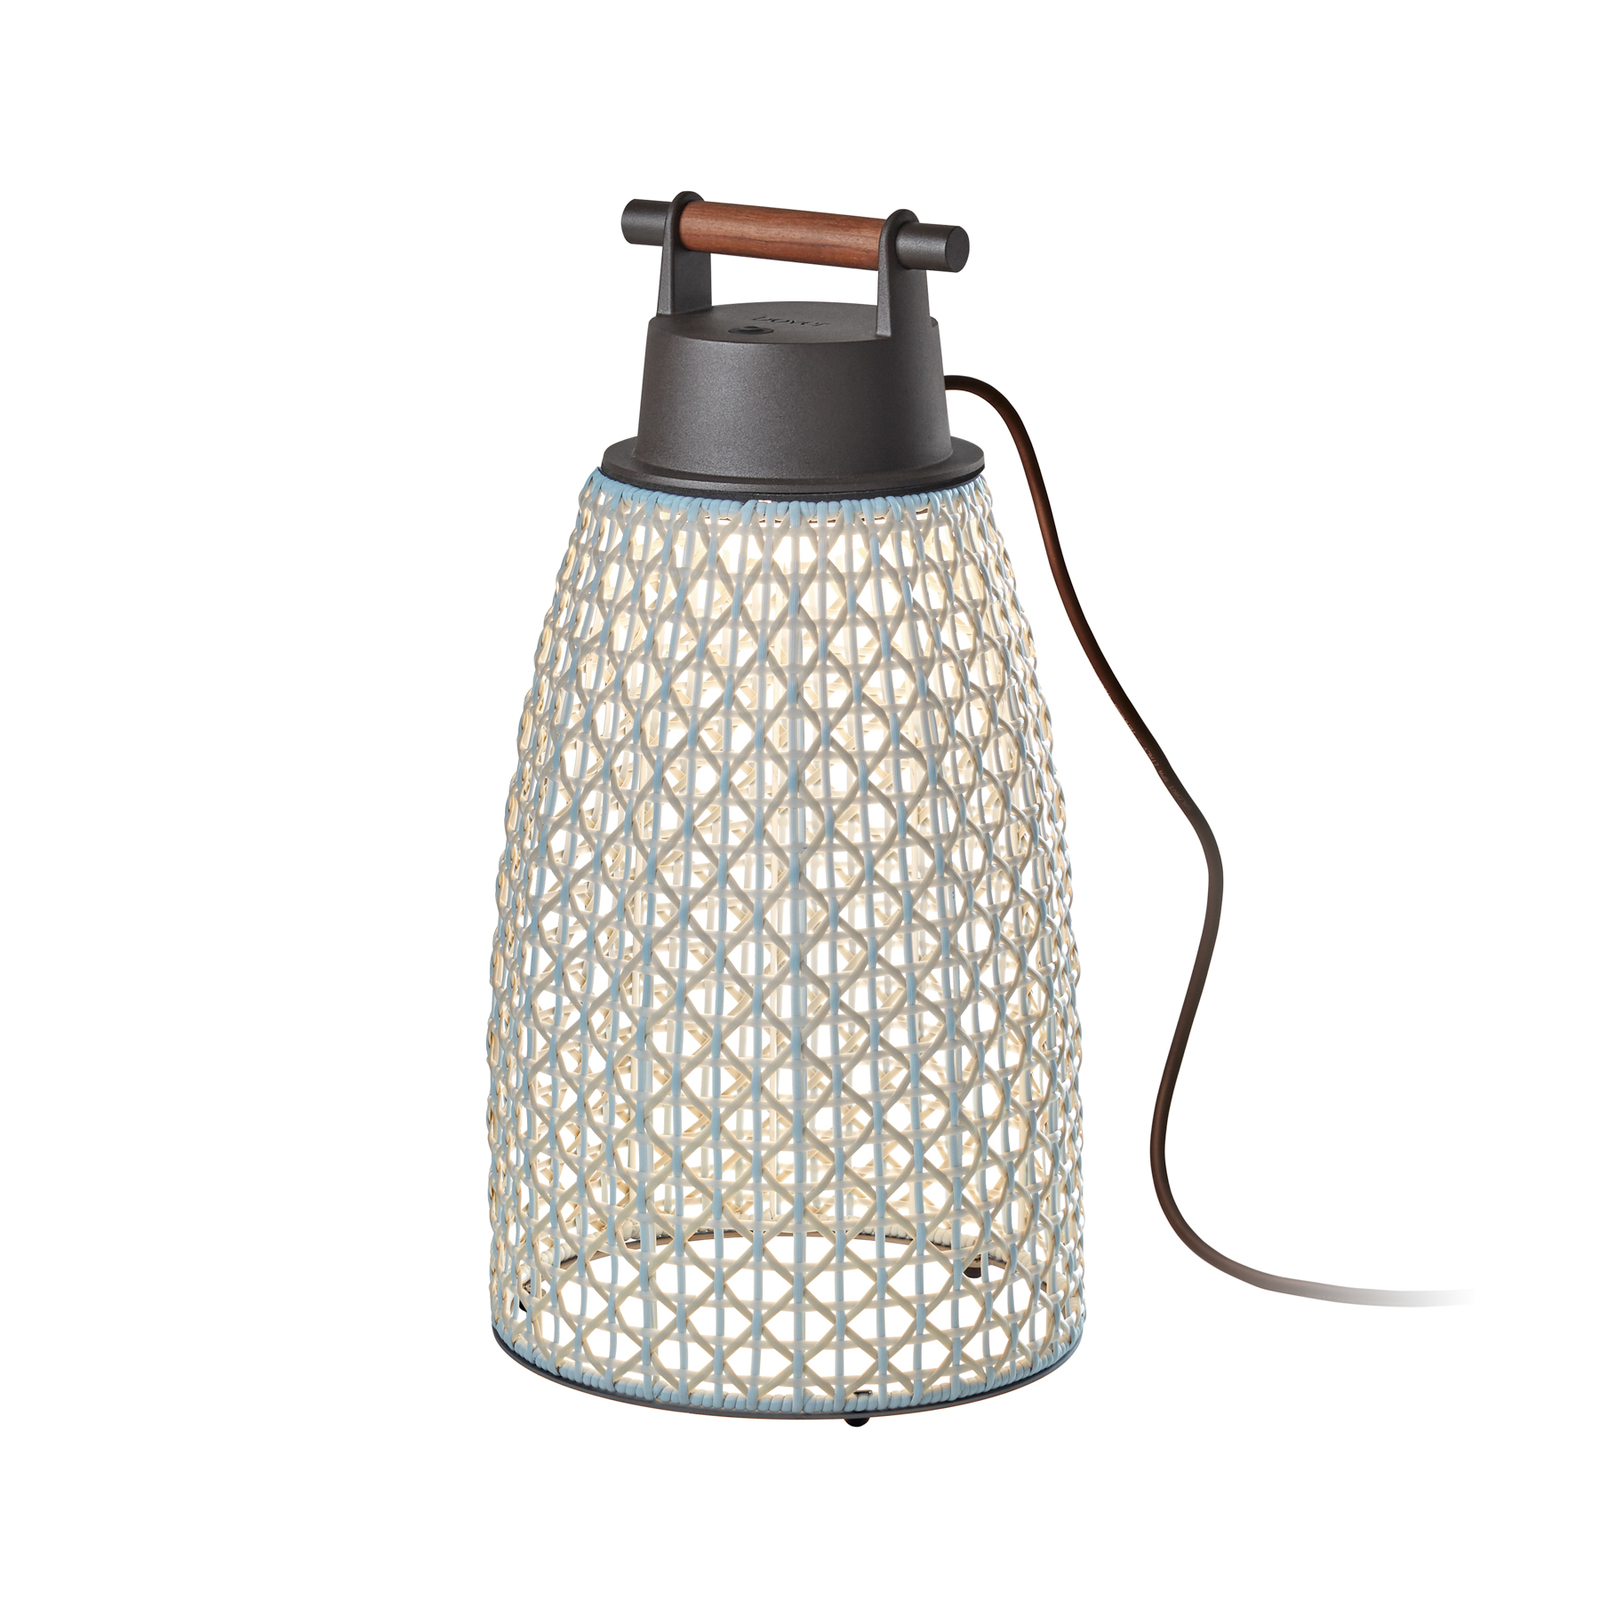 Bover Nans M/49 LED table lamp for outdoors, beige